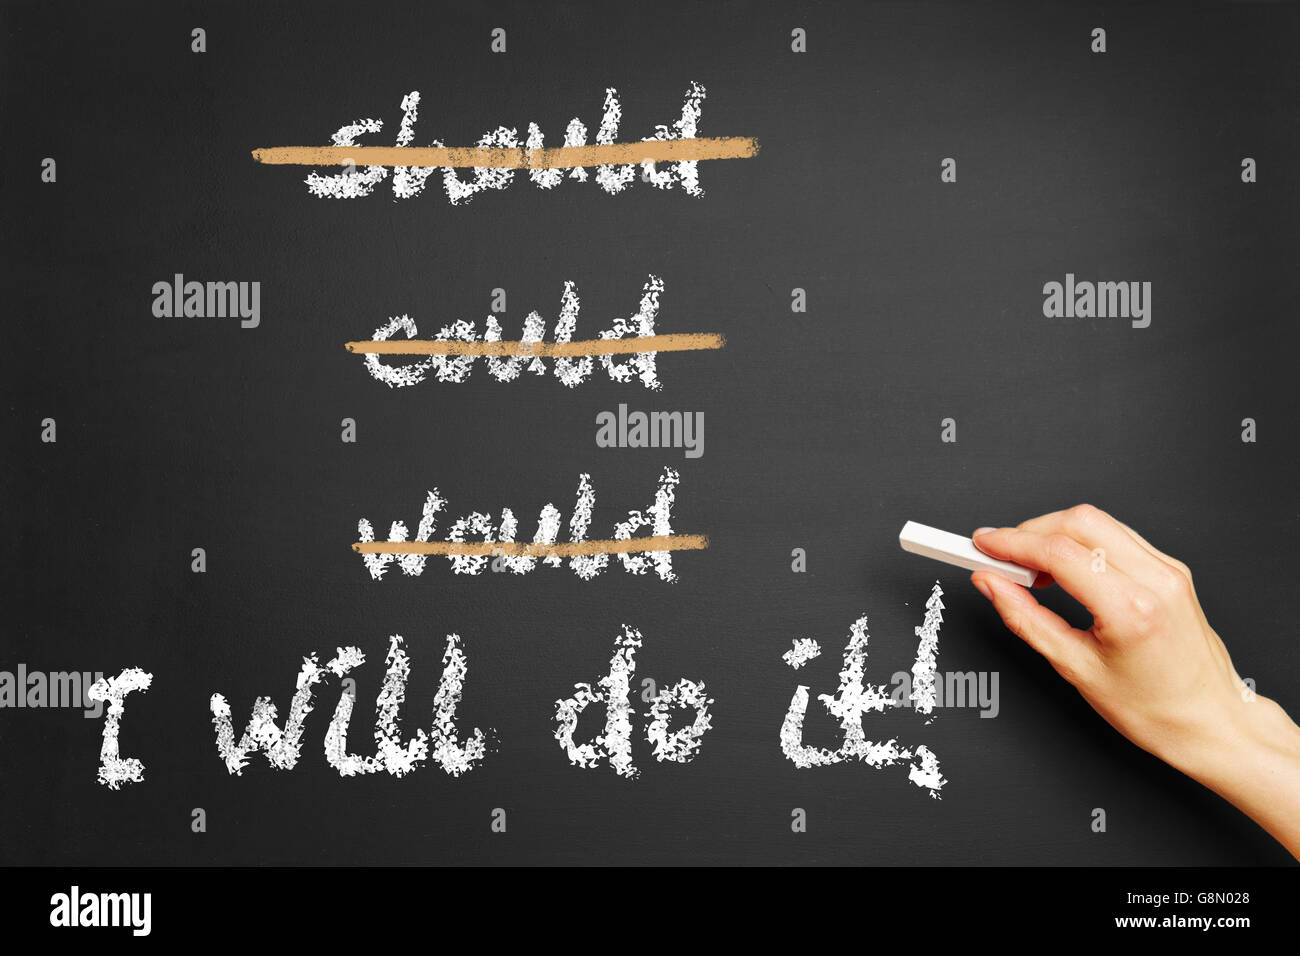 Motivational slogan 'I'll do it!' written on a chalkboard by hand Stock Photo